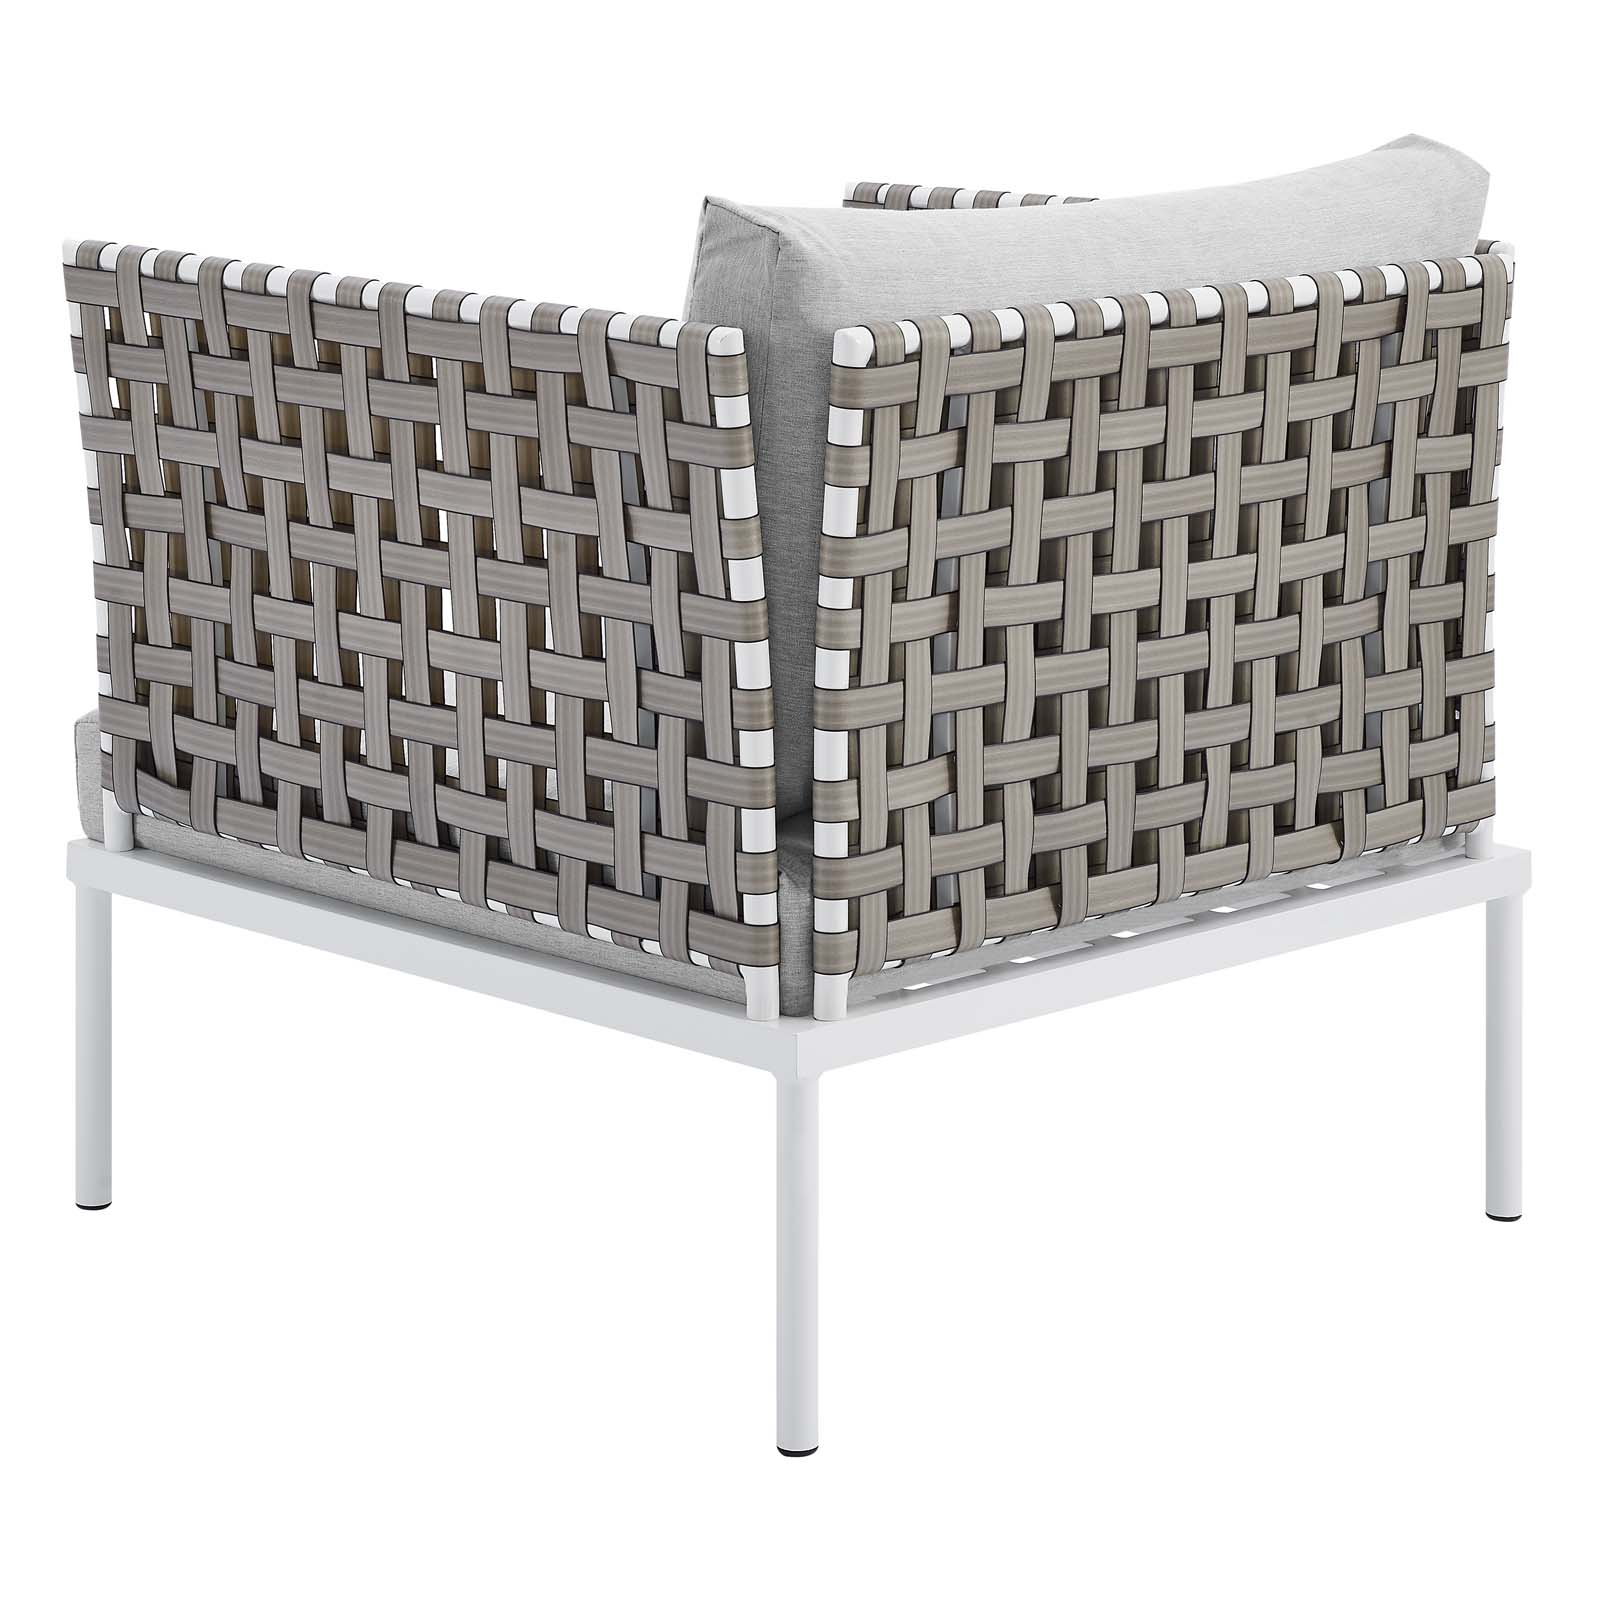 Side Lounge Chair Armchair, Sunbrella, Aluminum, Metal, Steel, Grey Gray, Modern Contemporary Urban Design, Outdoor Patio Balcony Cafe Bistro Garden Furniture Hotel Hospitality - image 5 of 8